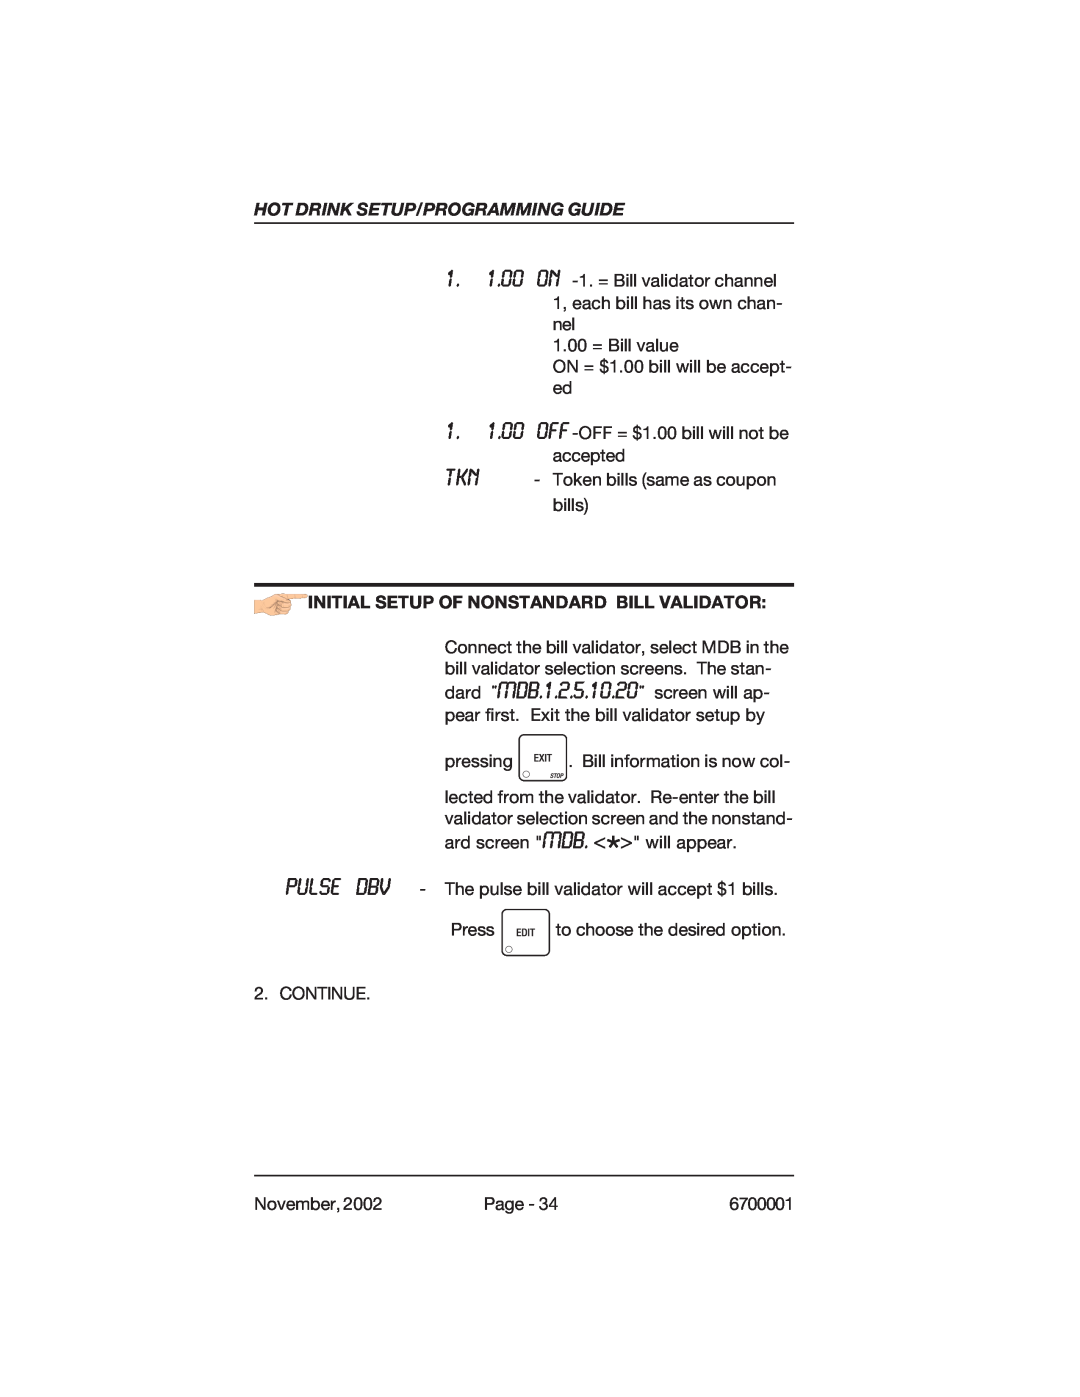 Crane Merchandising Systems 670, 678 manual Initial Setup Of Nonstandard Bill Validator, Hot Drink Setup/Programming Guide 